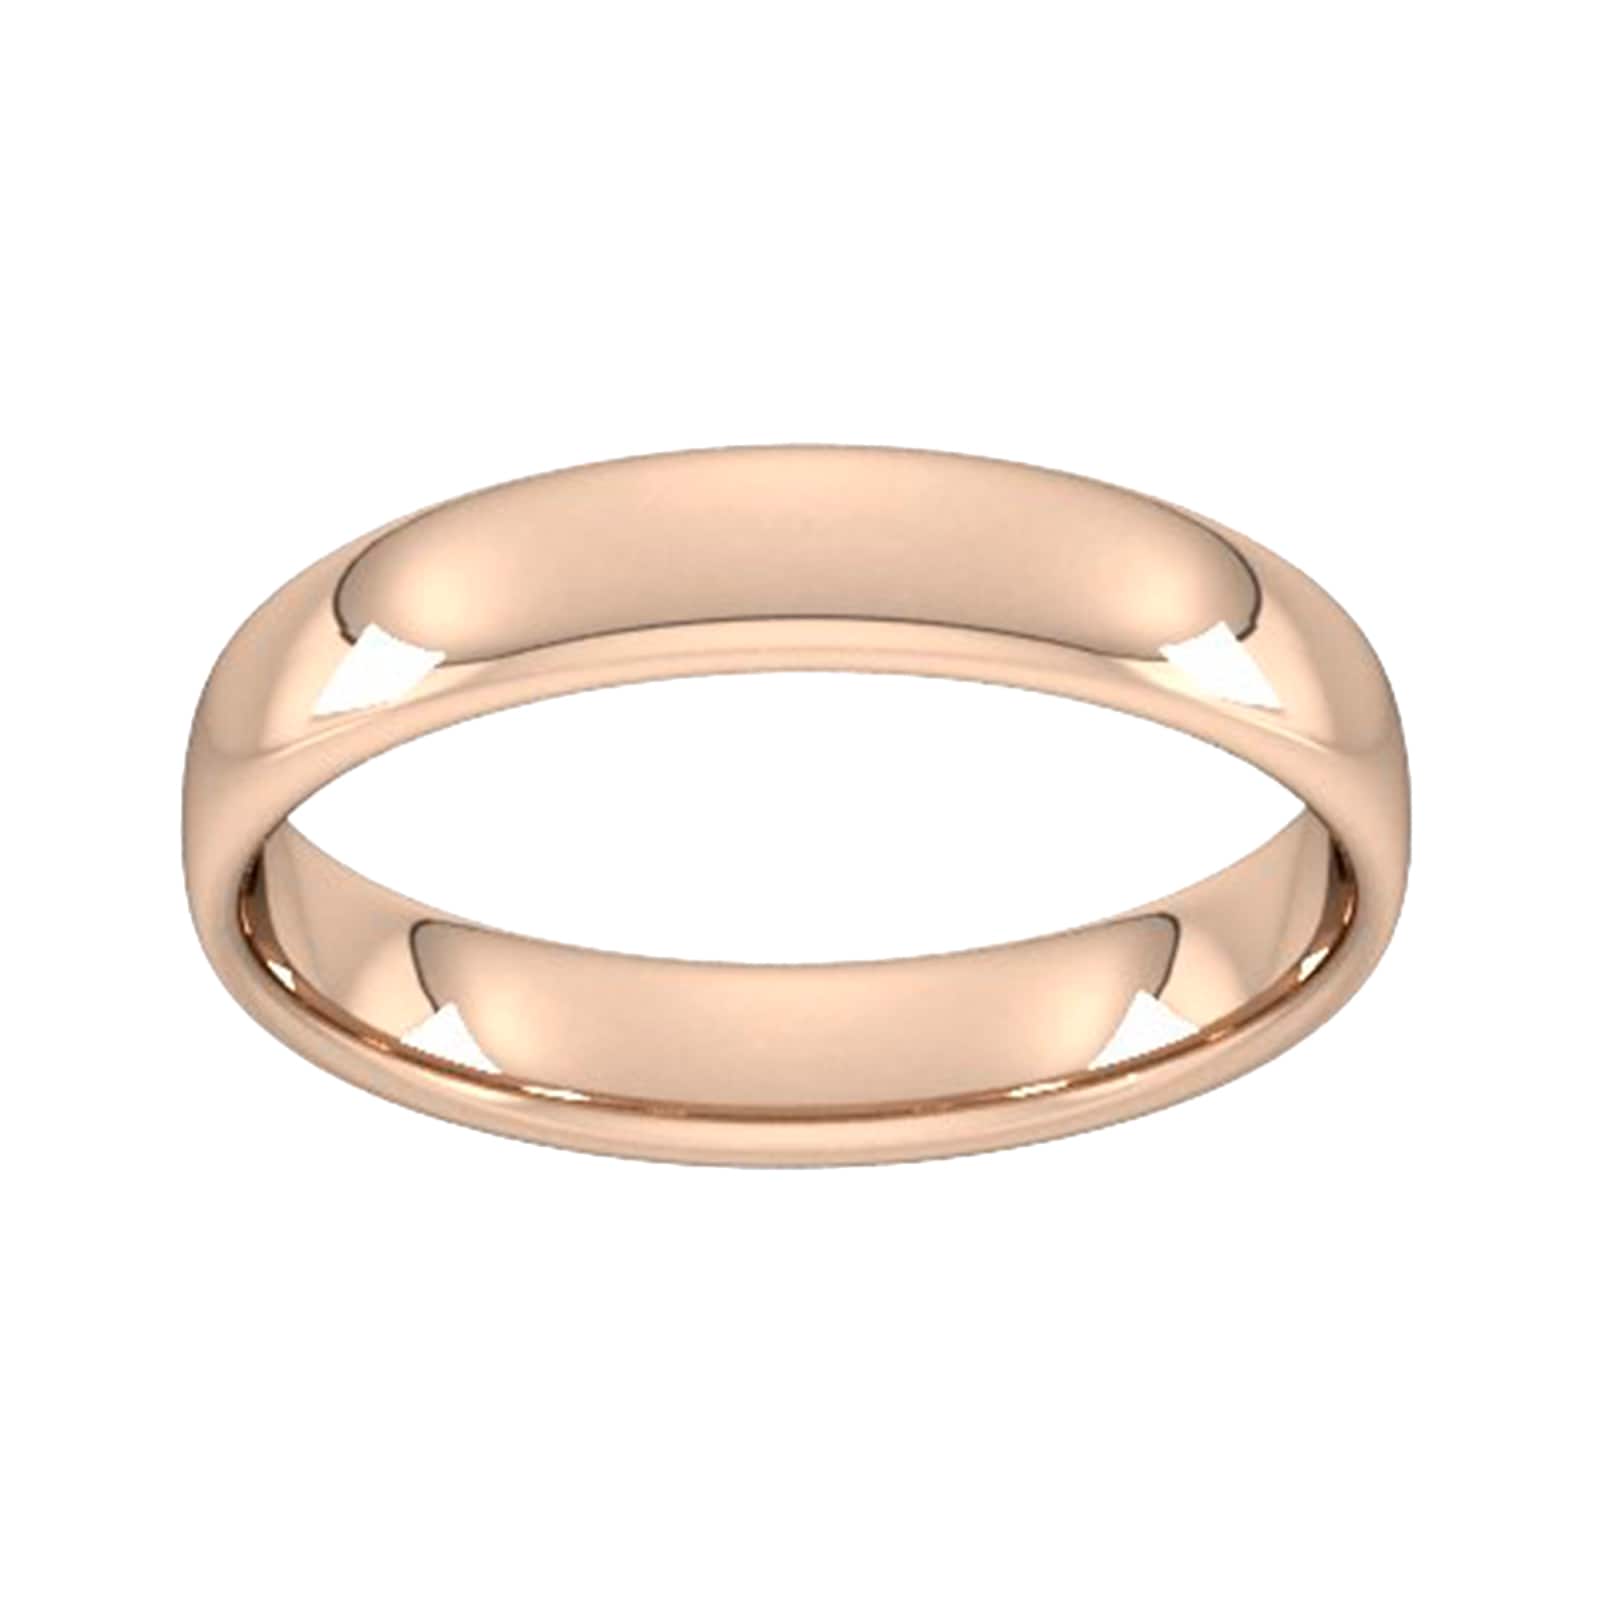 4mm Slight Court Standard Wedding Ring In 18 Carat Rose Gold - Ring Size J